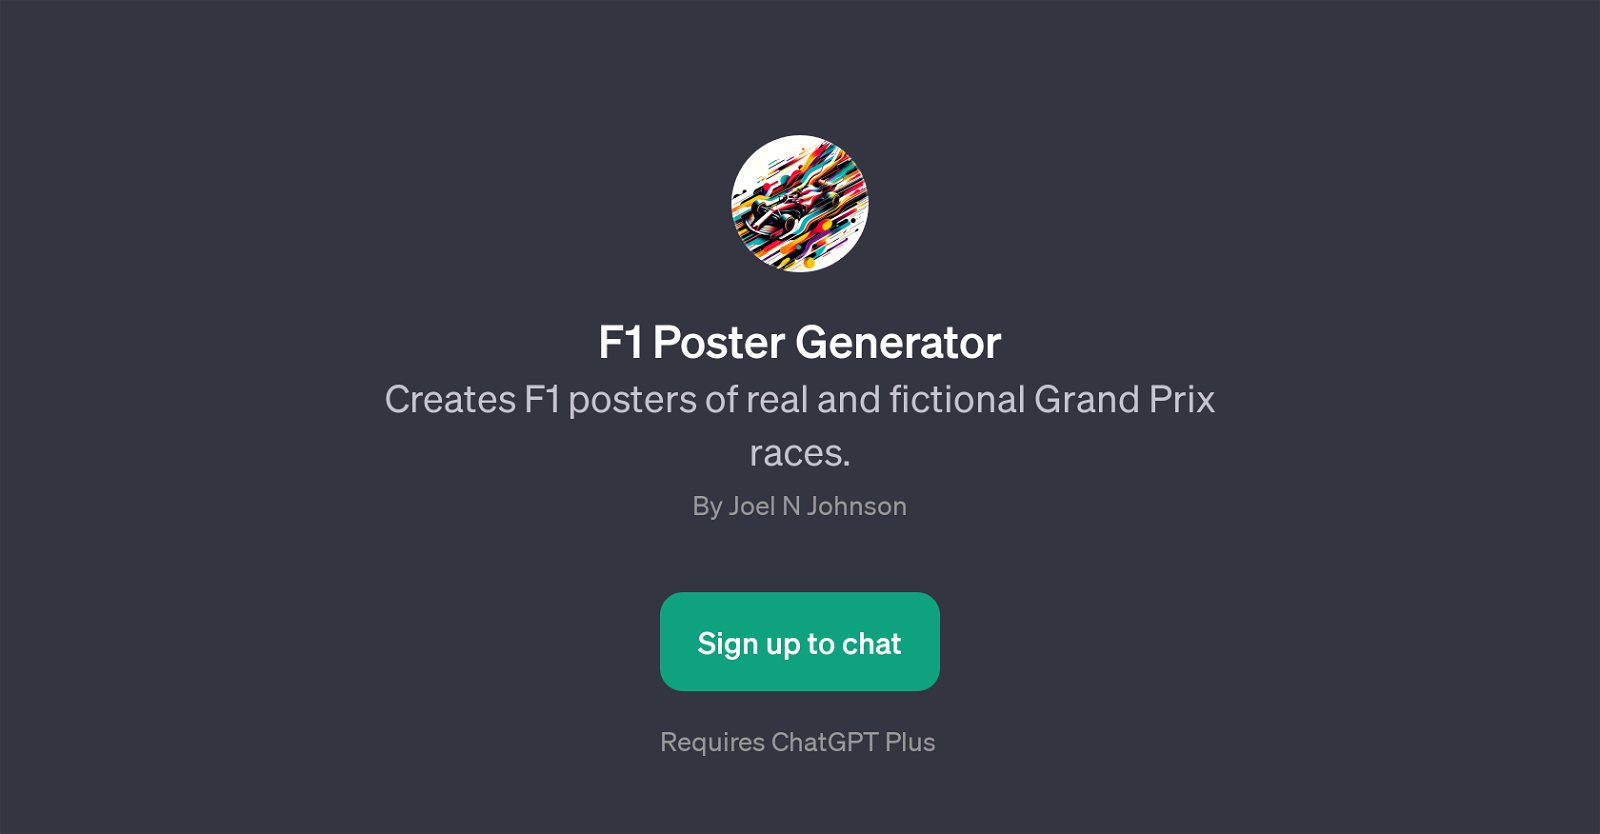 F1 Poster Generator website